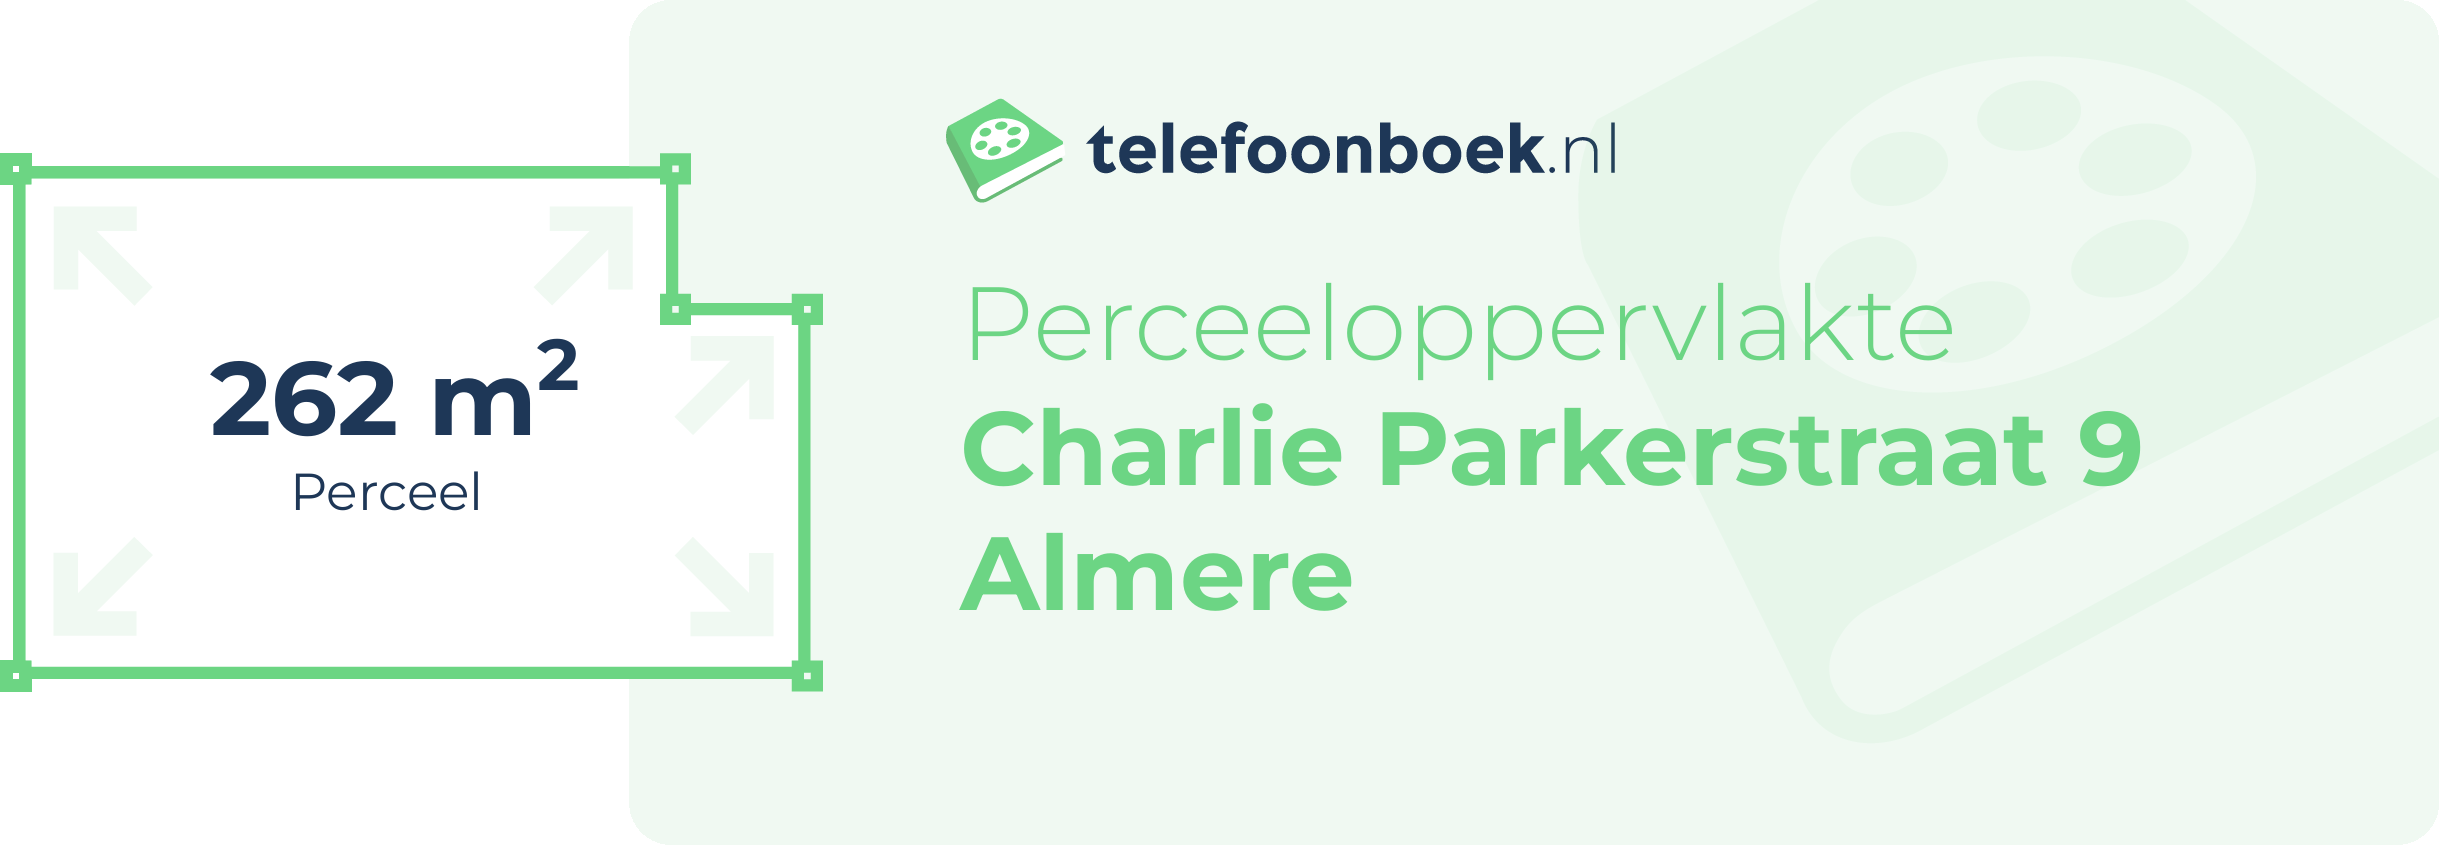 Perceeloppervlakte Charlie Parkerstraat 9 Almere